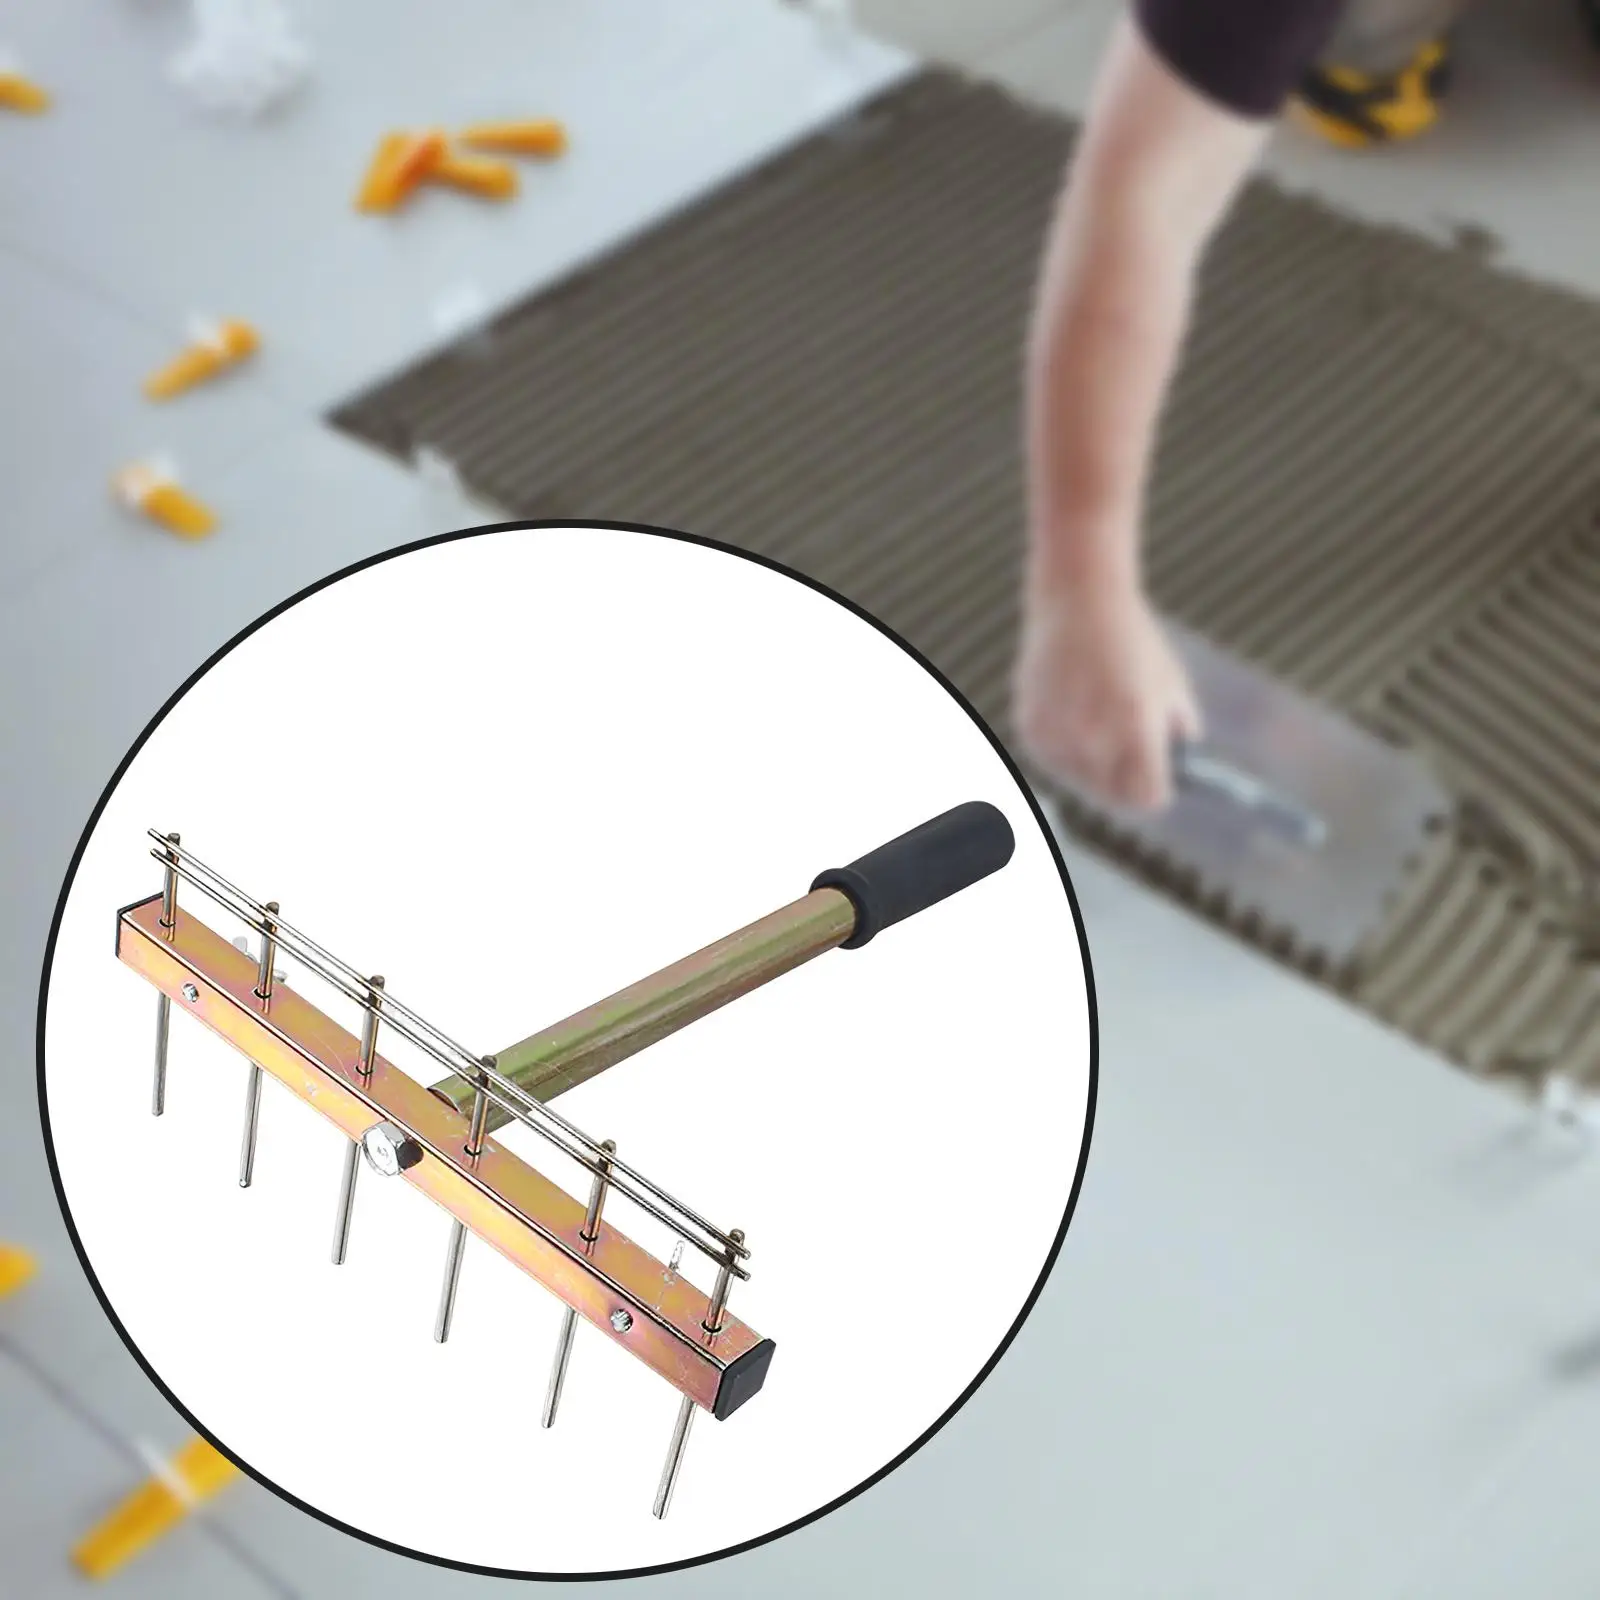 Tiles Trowel Lightweight Loosening Mortar Tines Practical Multifunctional Notch Trowel Paving Tiles Device Floor Ceramic Trowel